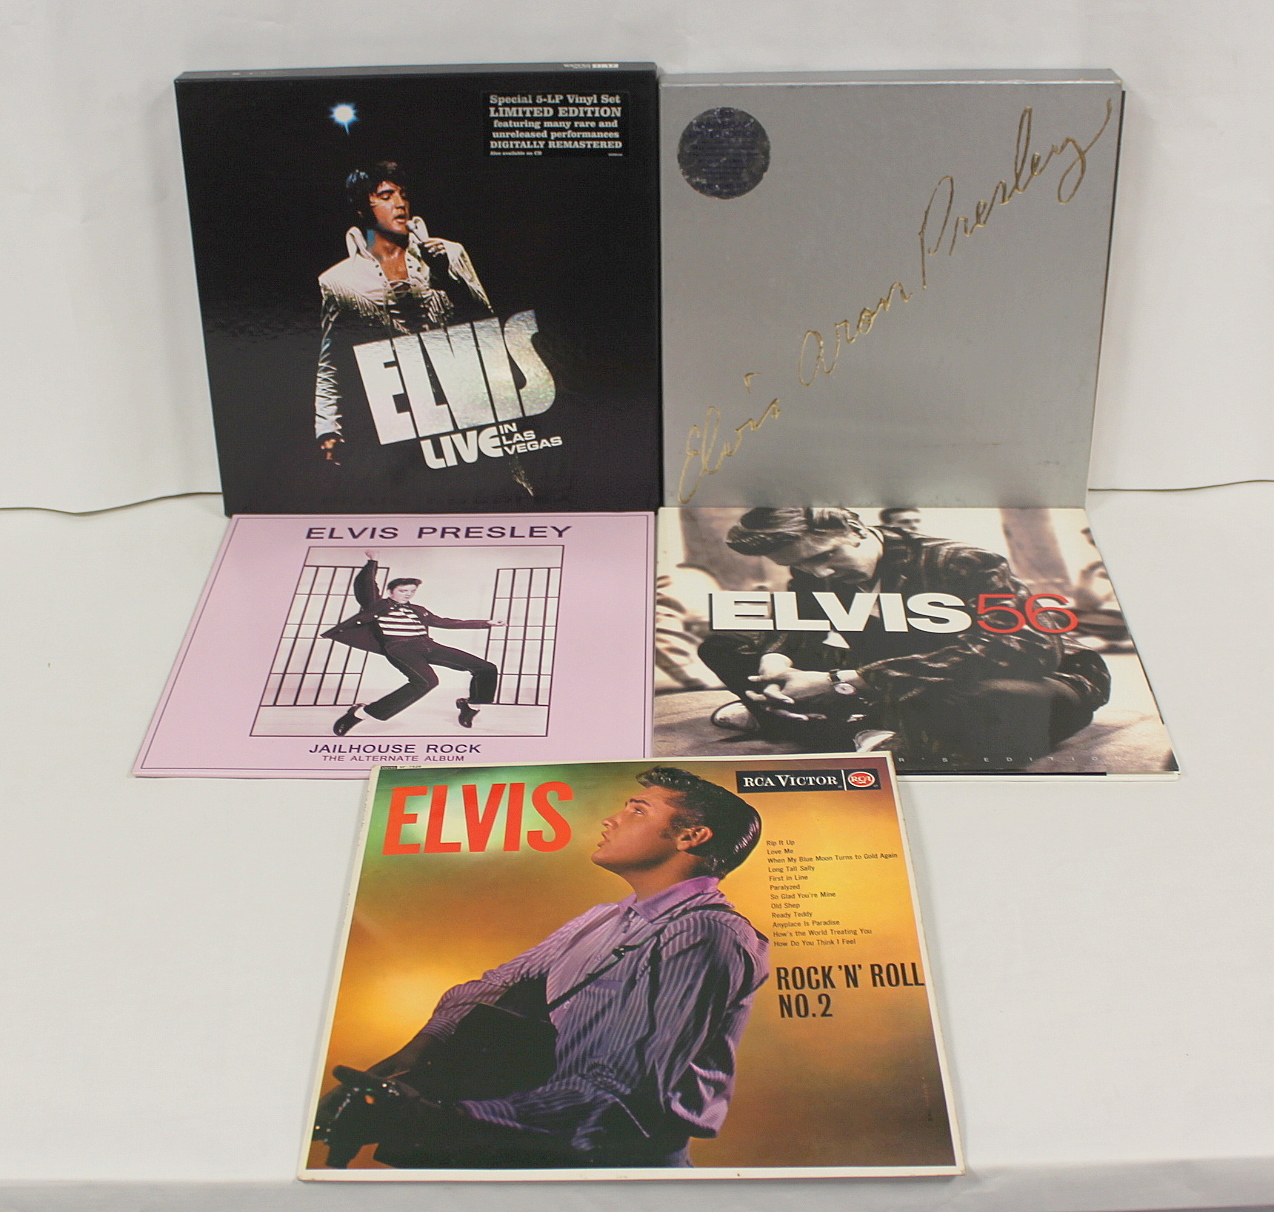 Elvis Presley LPs to include 'Elvis Aron Presley' 8 x LP box set, 'Live In Las Vegas' box set, '